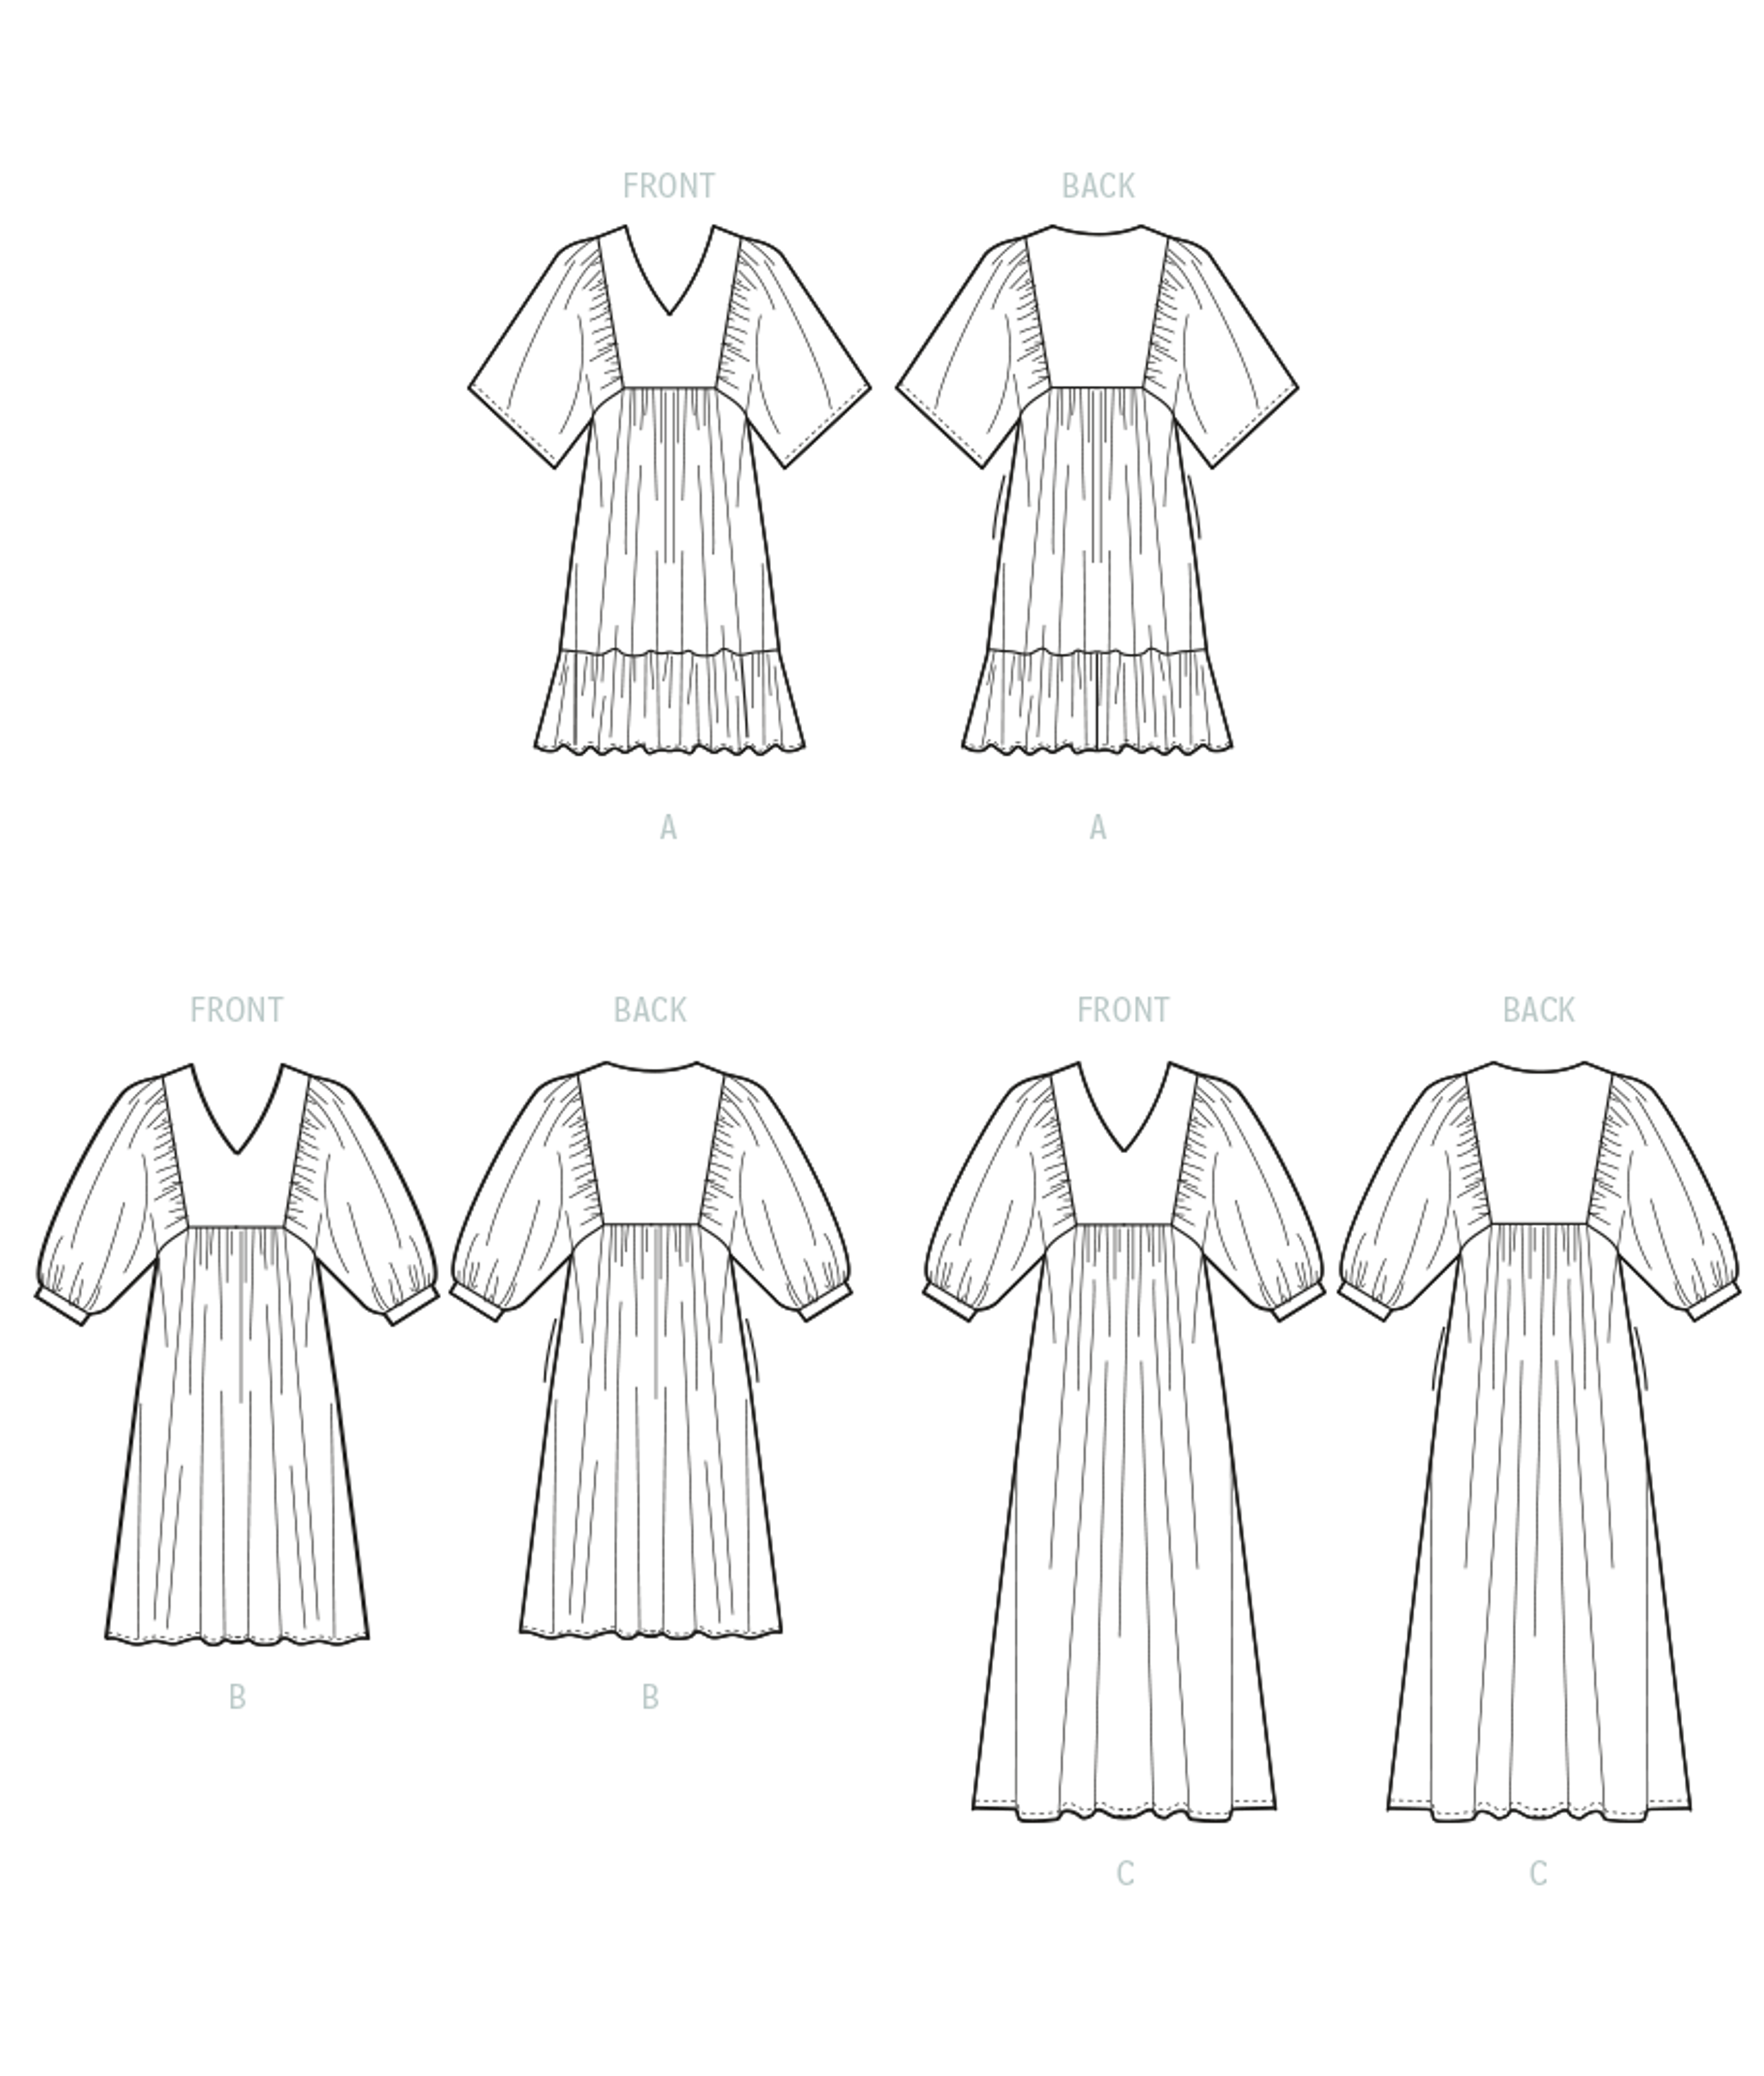 M8312 | Misses' Dresses | McCall's Patterns